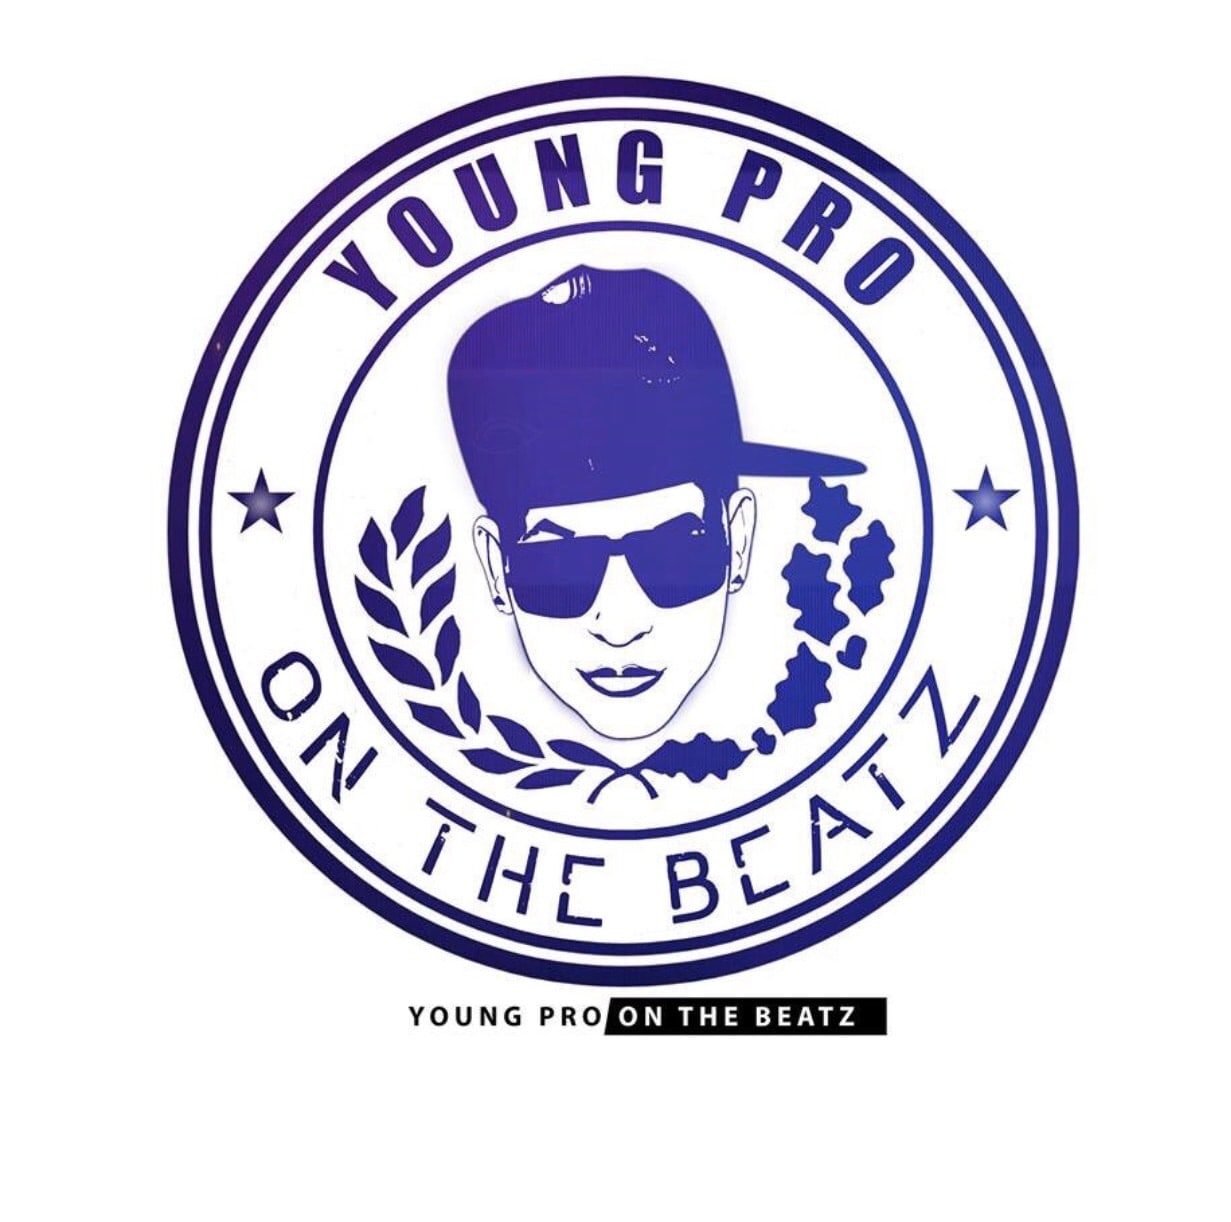 Young Pro Onda Beatz